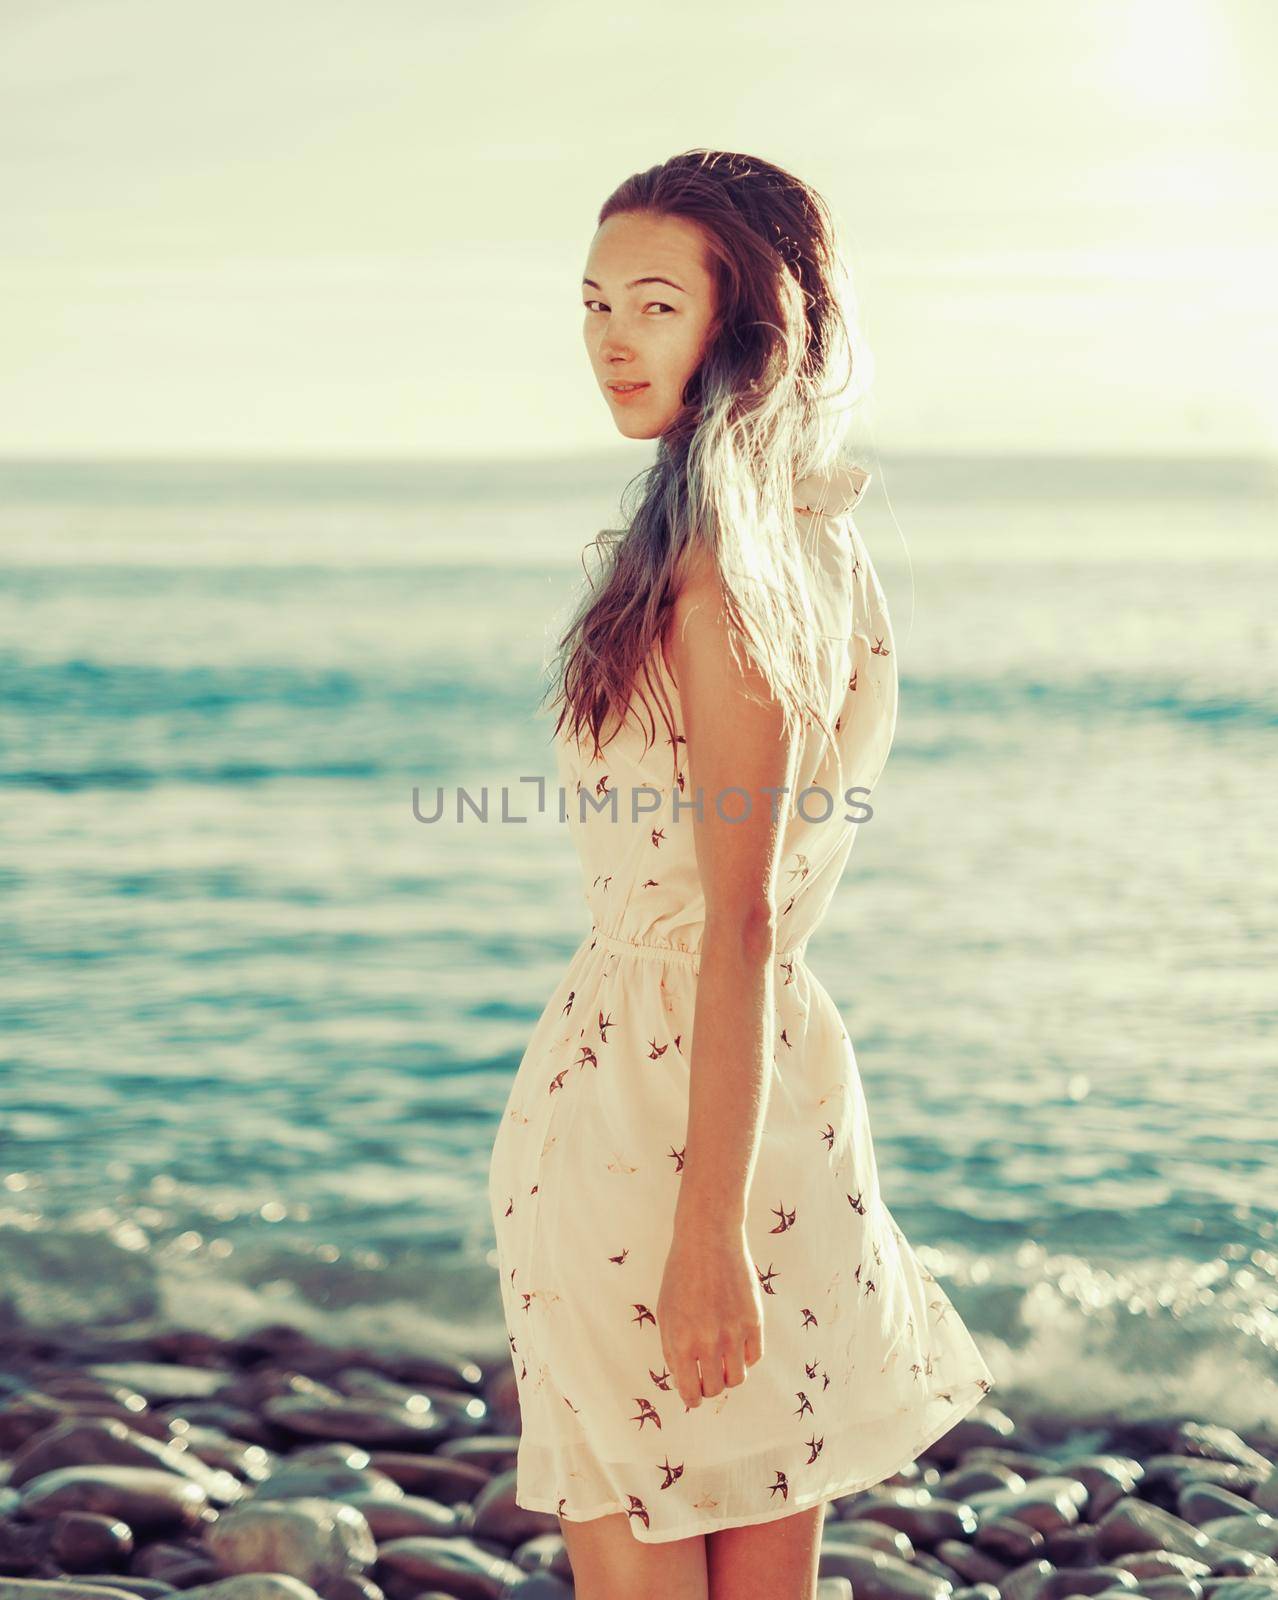 Young woman walking on beach by alexAleksei